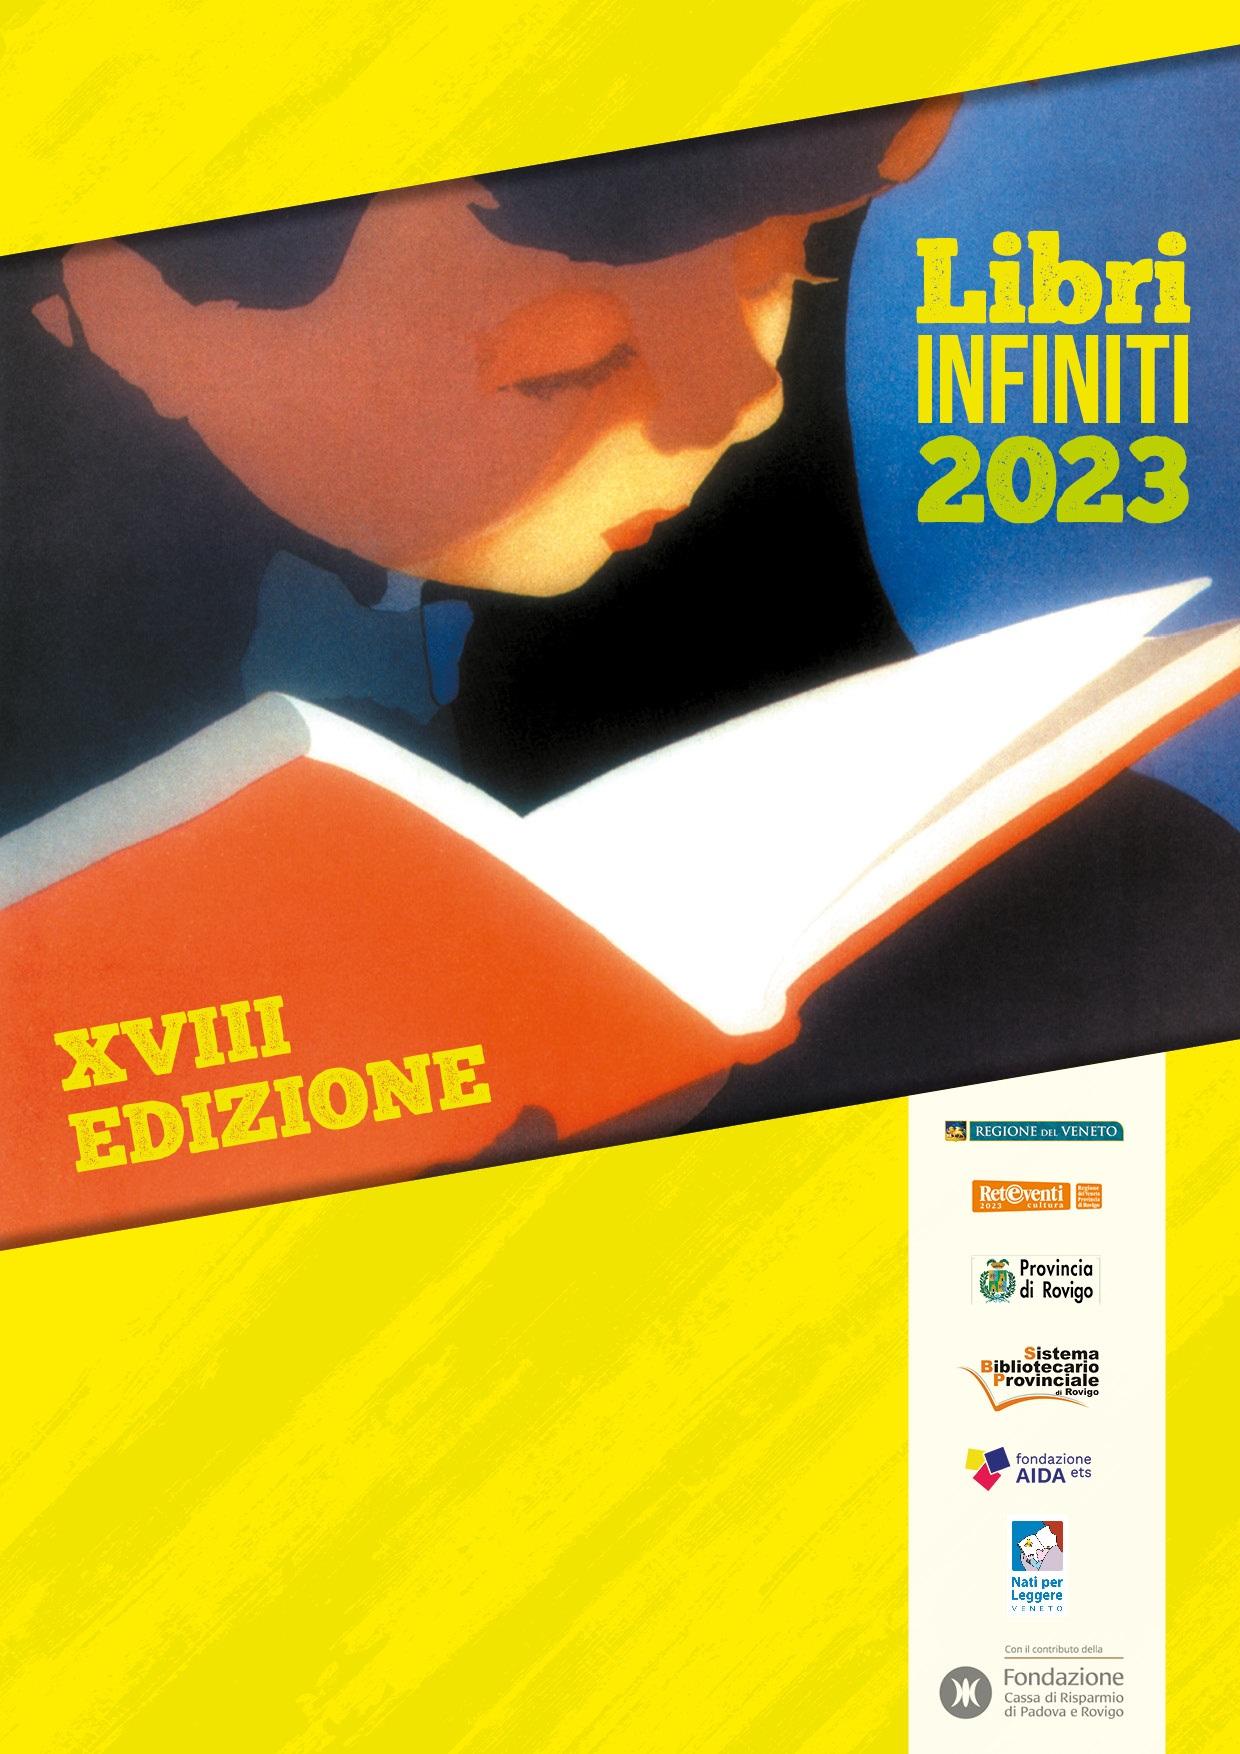 Libri Infiniti 2023 